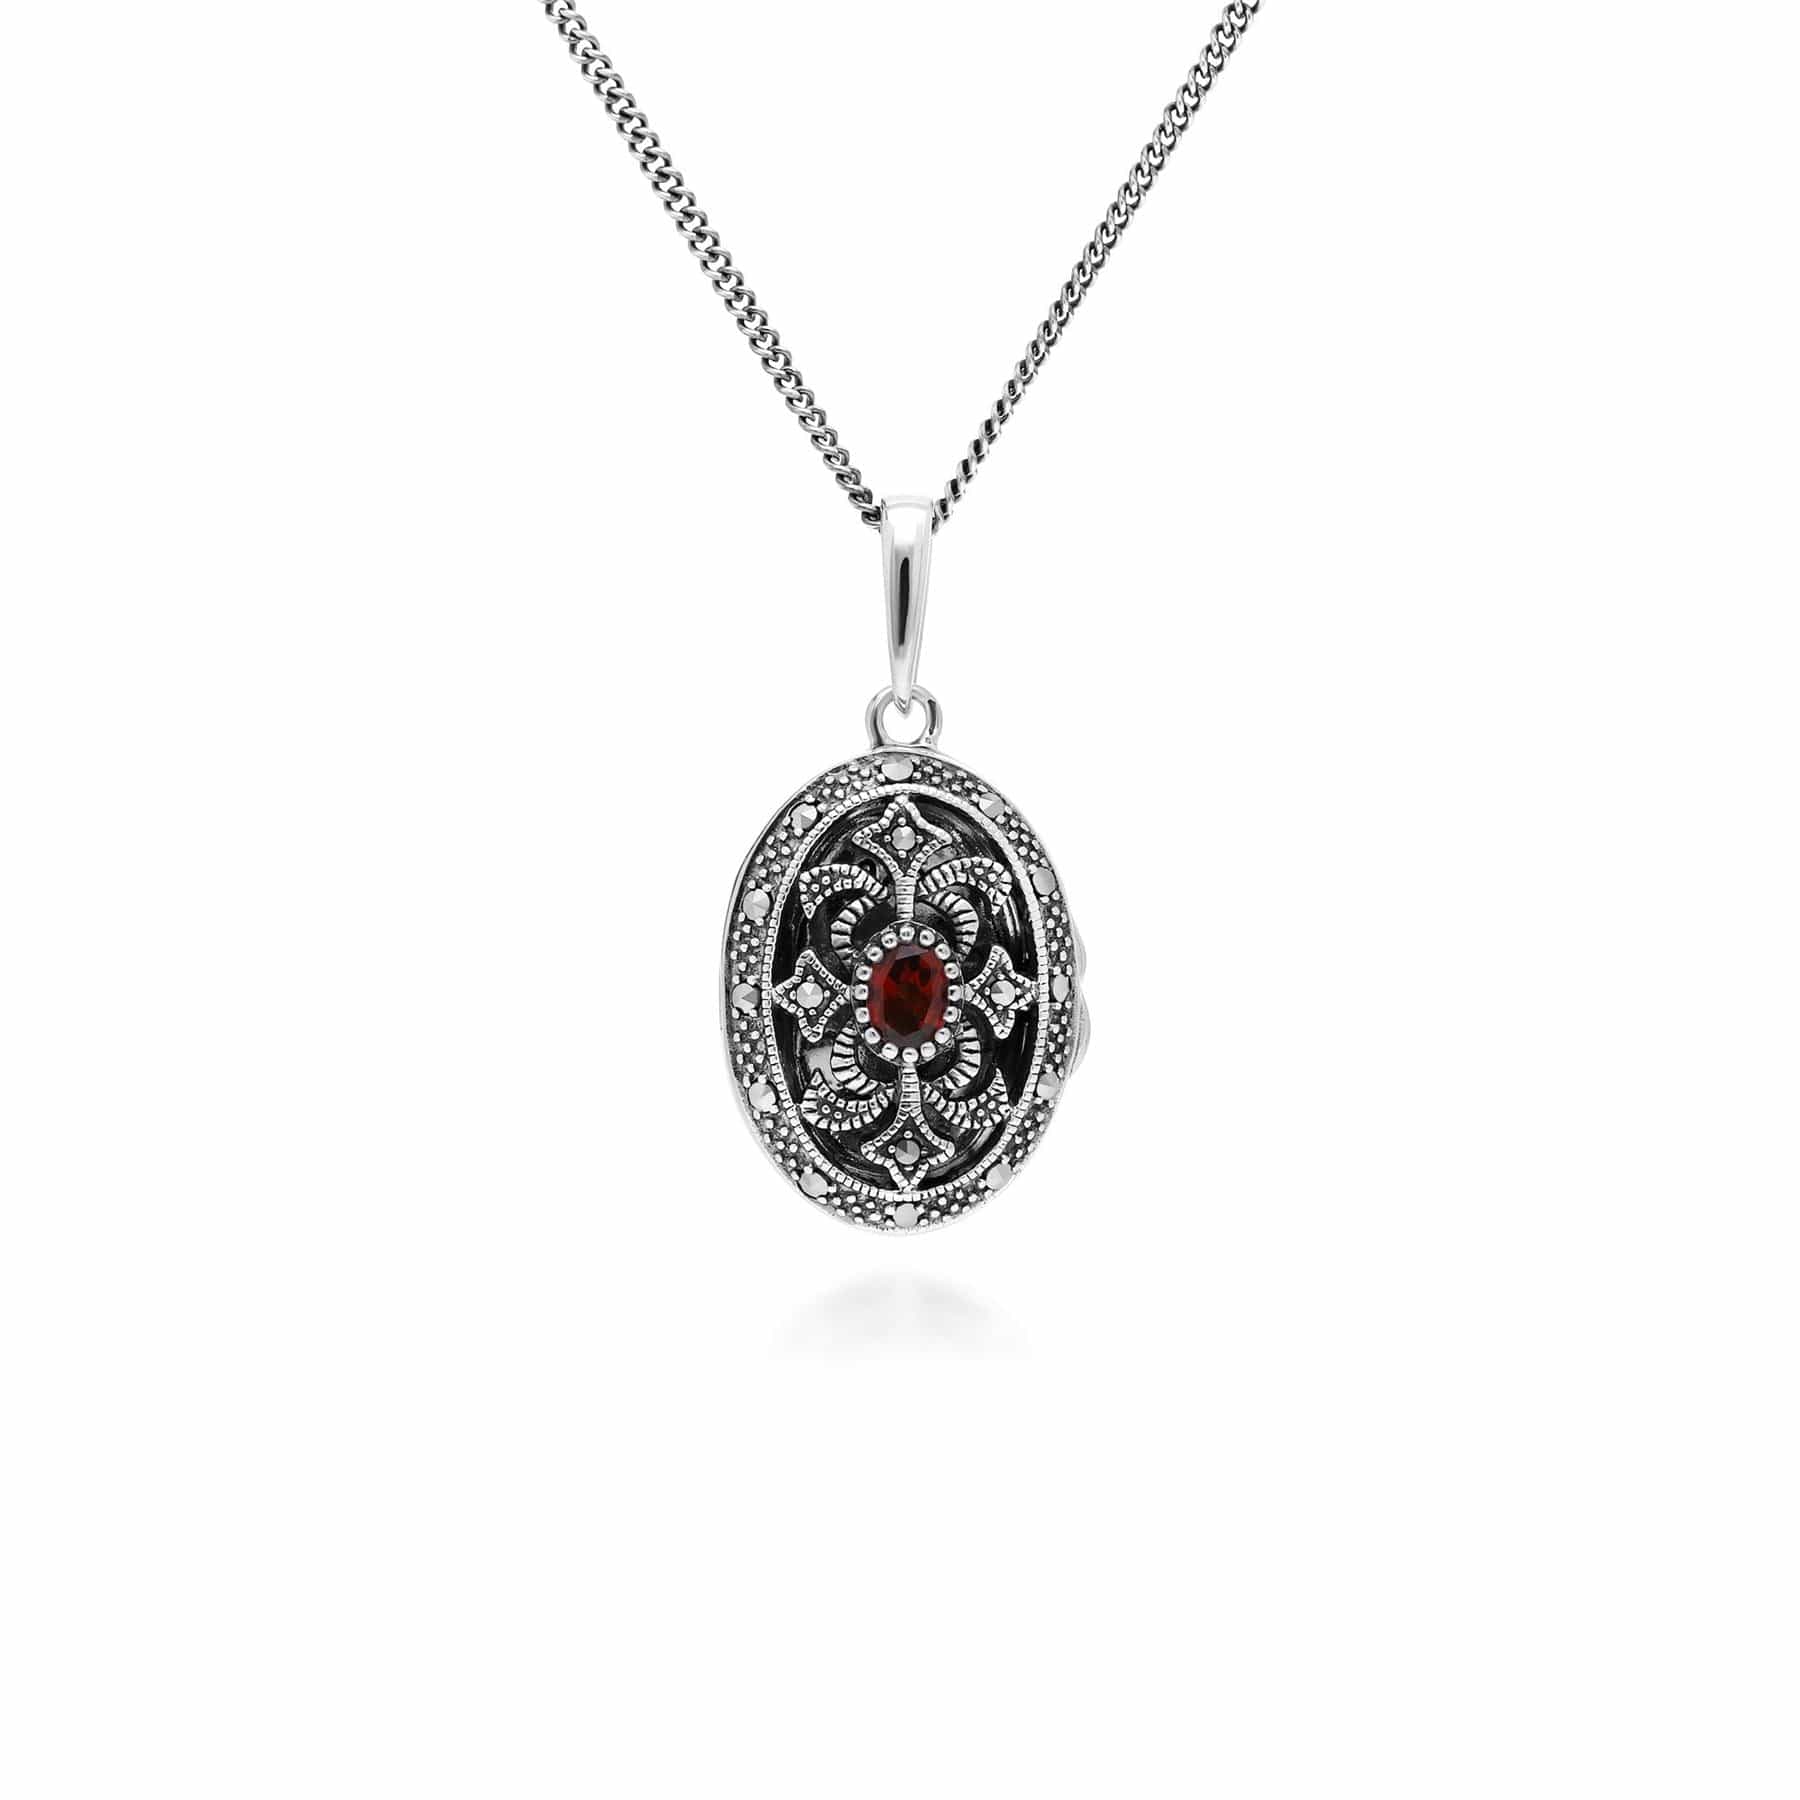 214N716204925 Art Nouveau Style Oval Garnet & Marcasite Locket Necklace in Sterling Silver 1